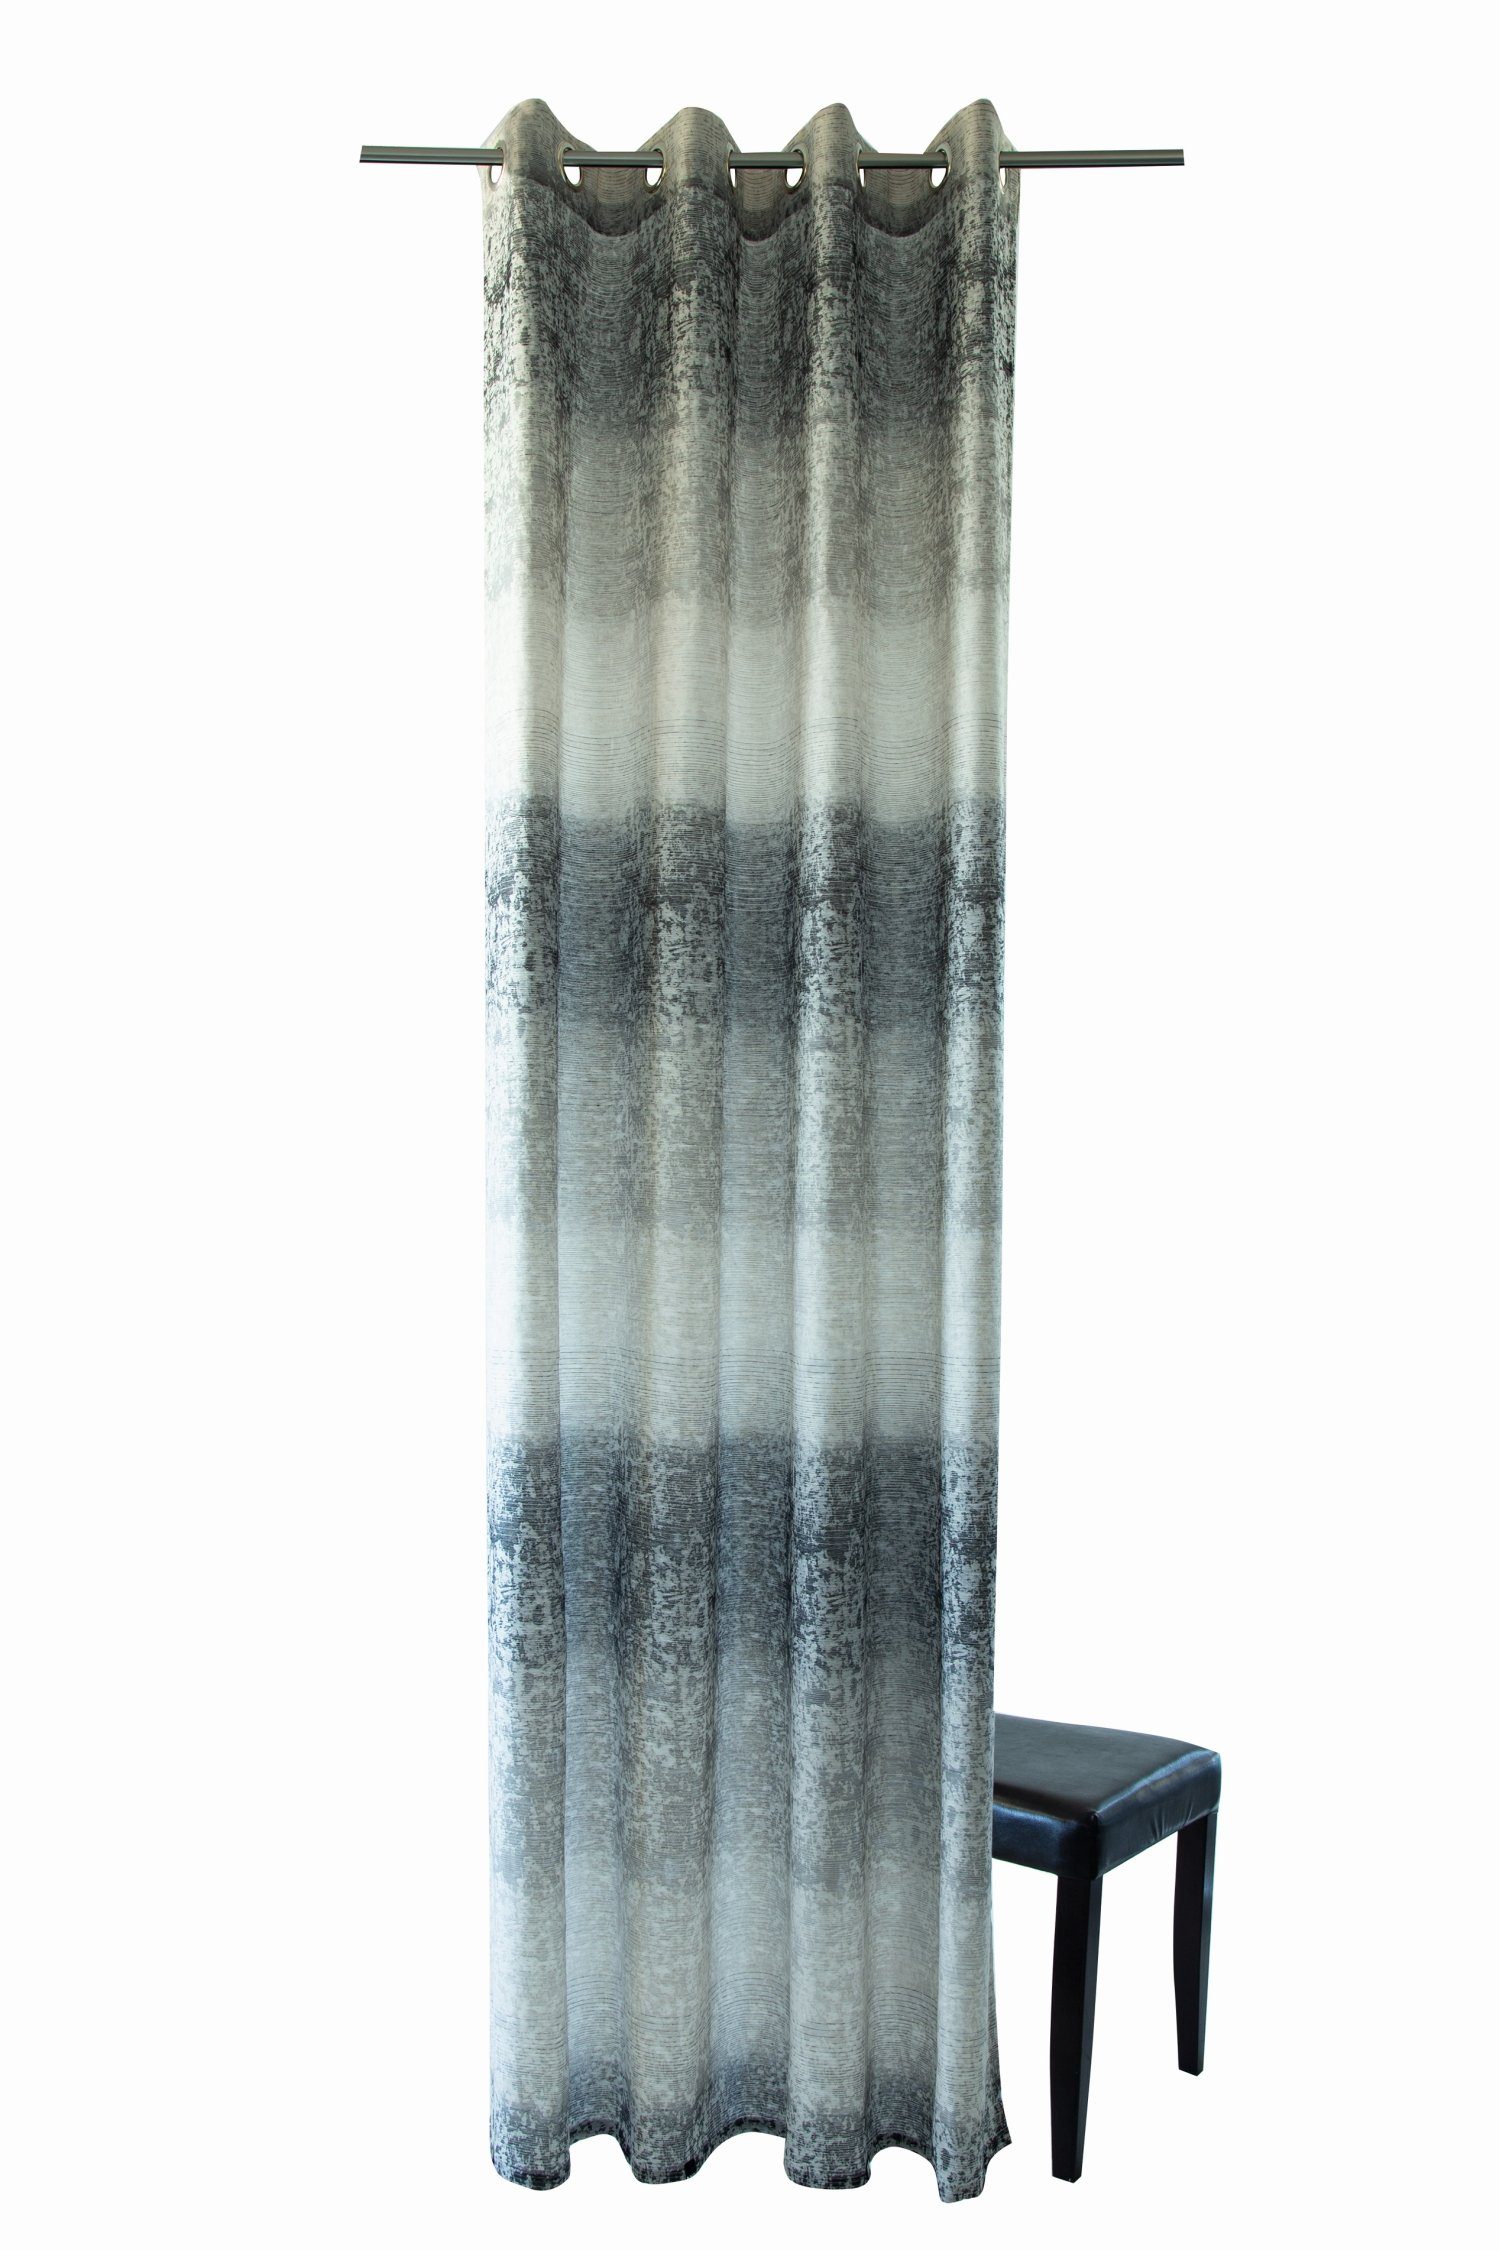 Vorhang, HOMING, Ösenschal 140x245cm Farbe: anthrazit Freya